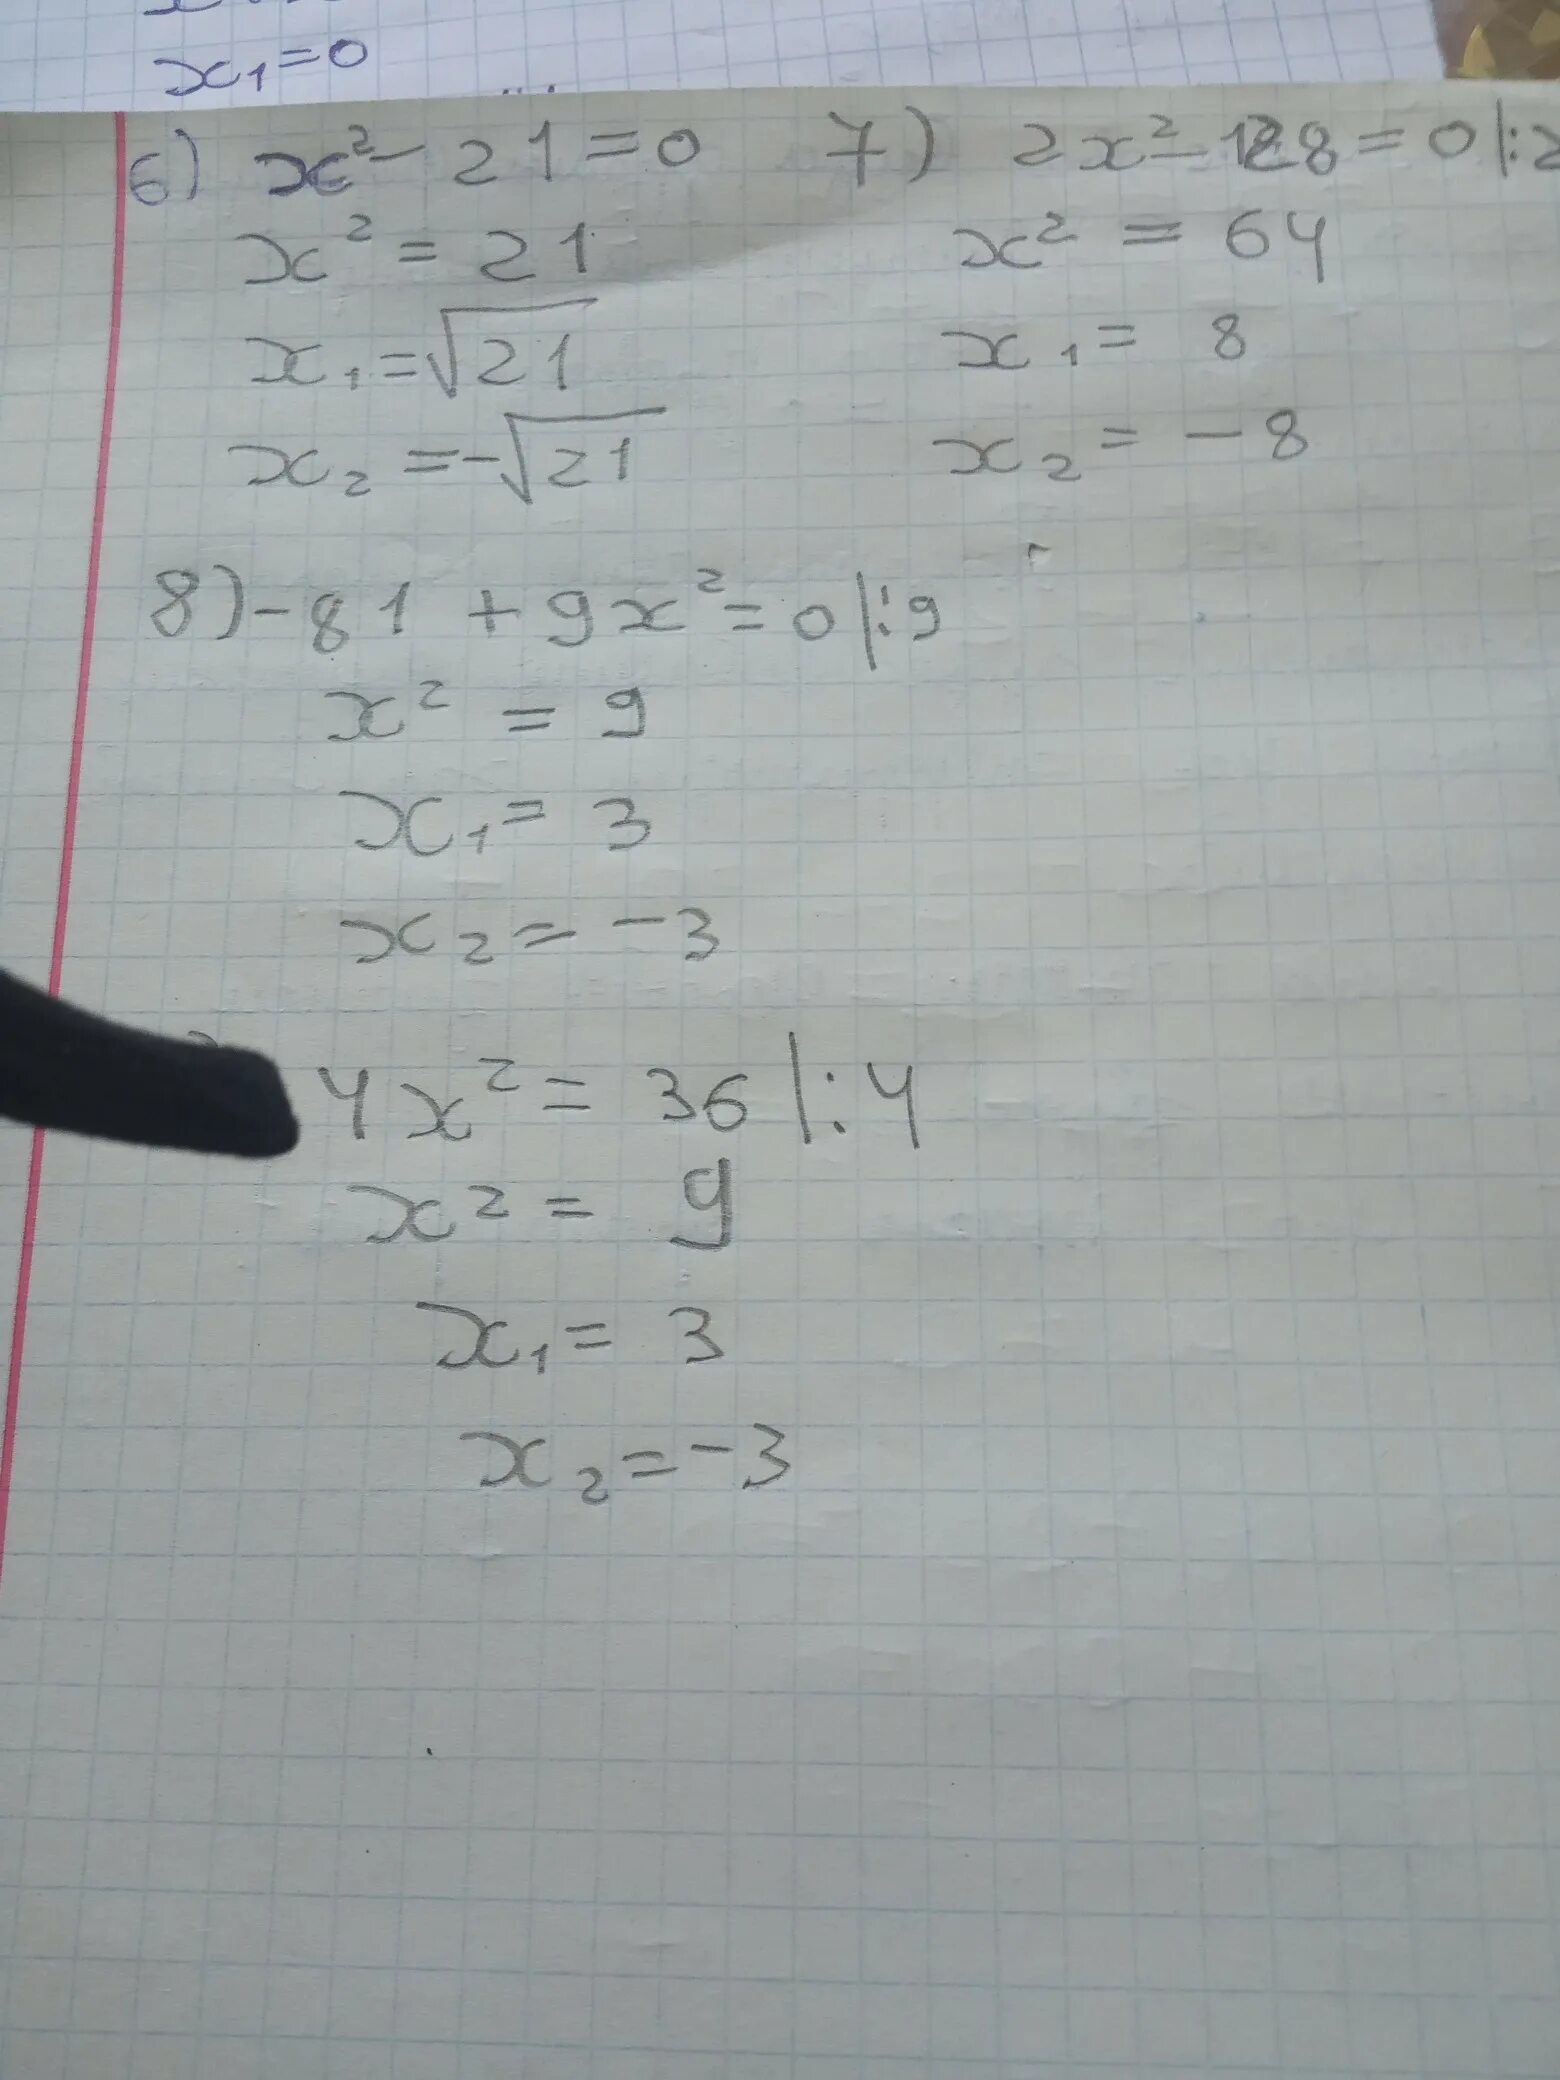 3x 6 6x 9 0. X2+3x-28. 5x^2+9x=0. X2/x2-9 12-x/x2-9. 3x 81 решение.